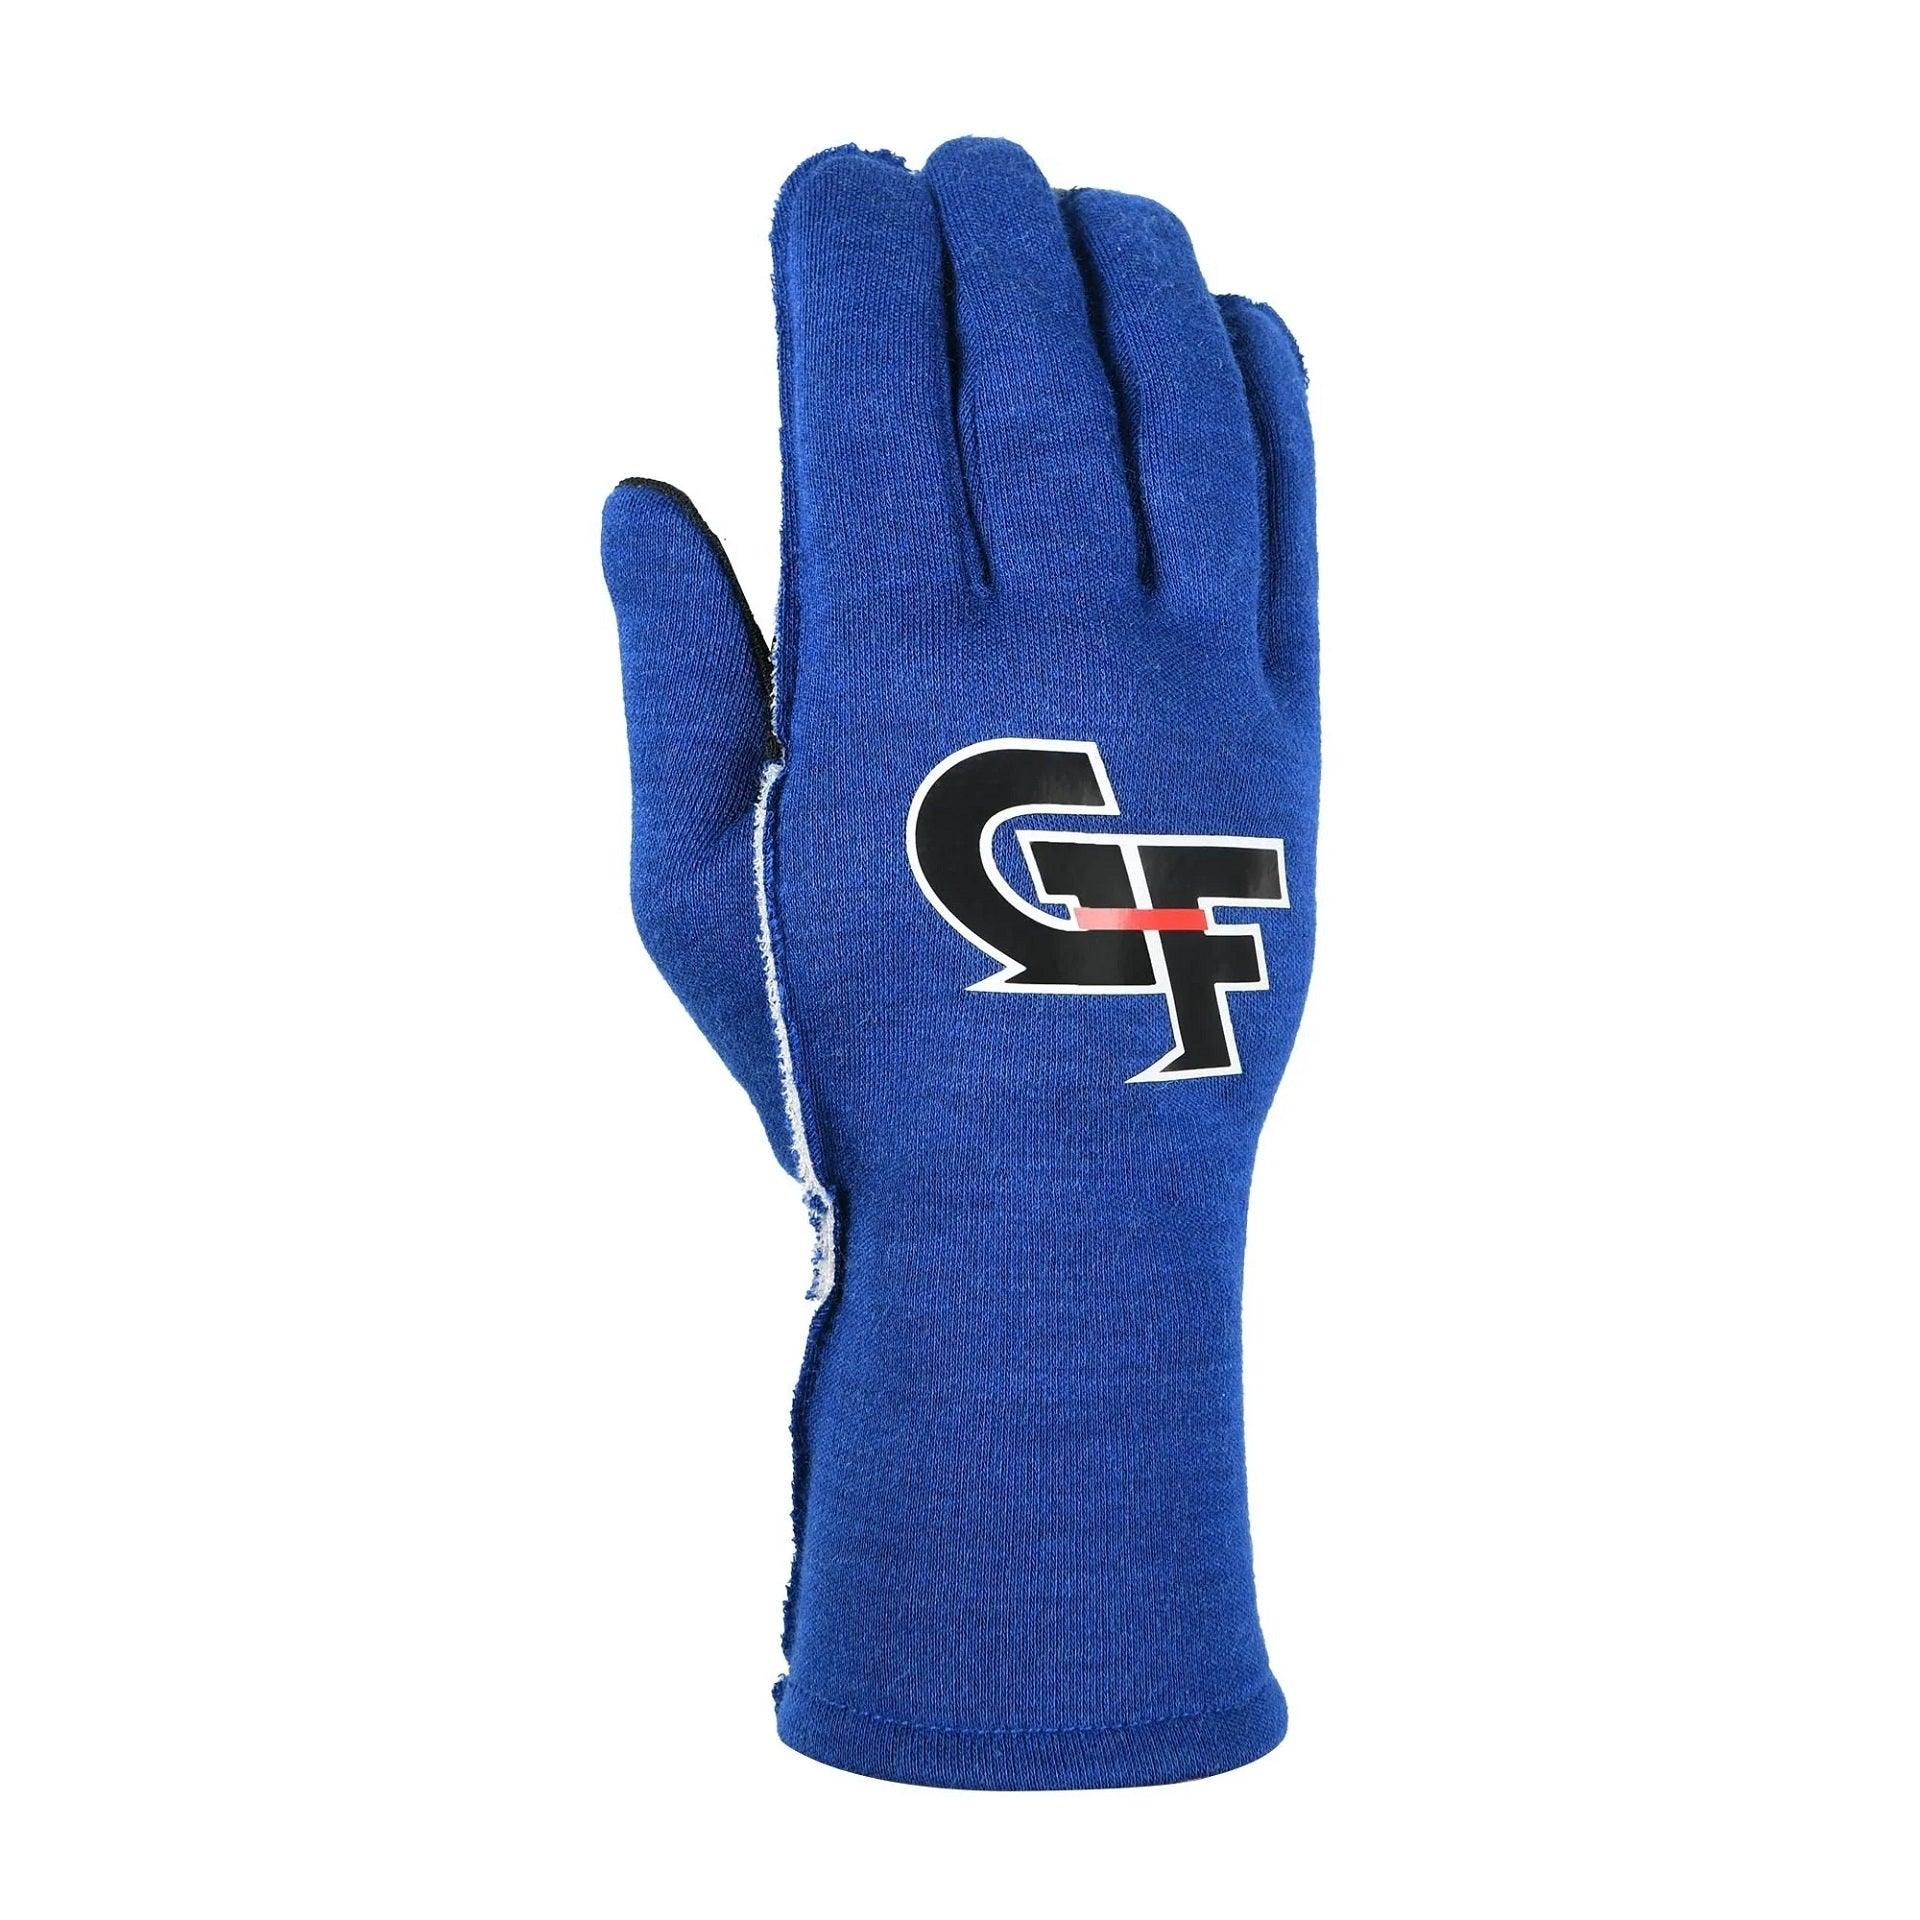 Gloves G-Limit Medium Blue - Burlile Performance Products